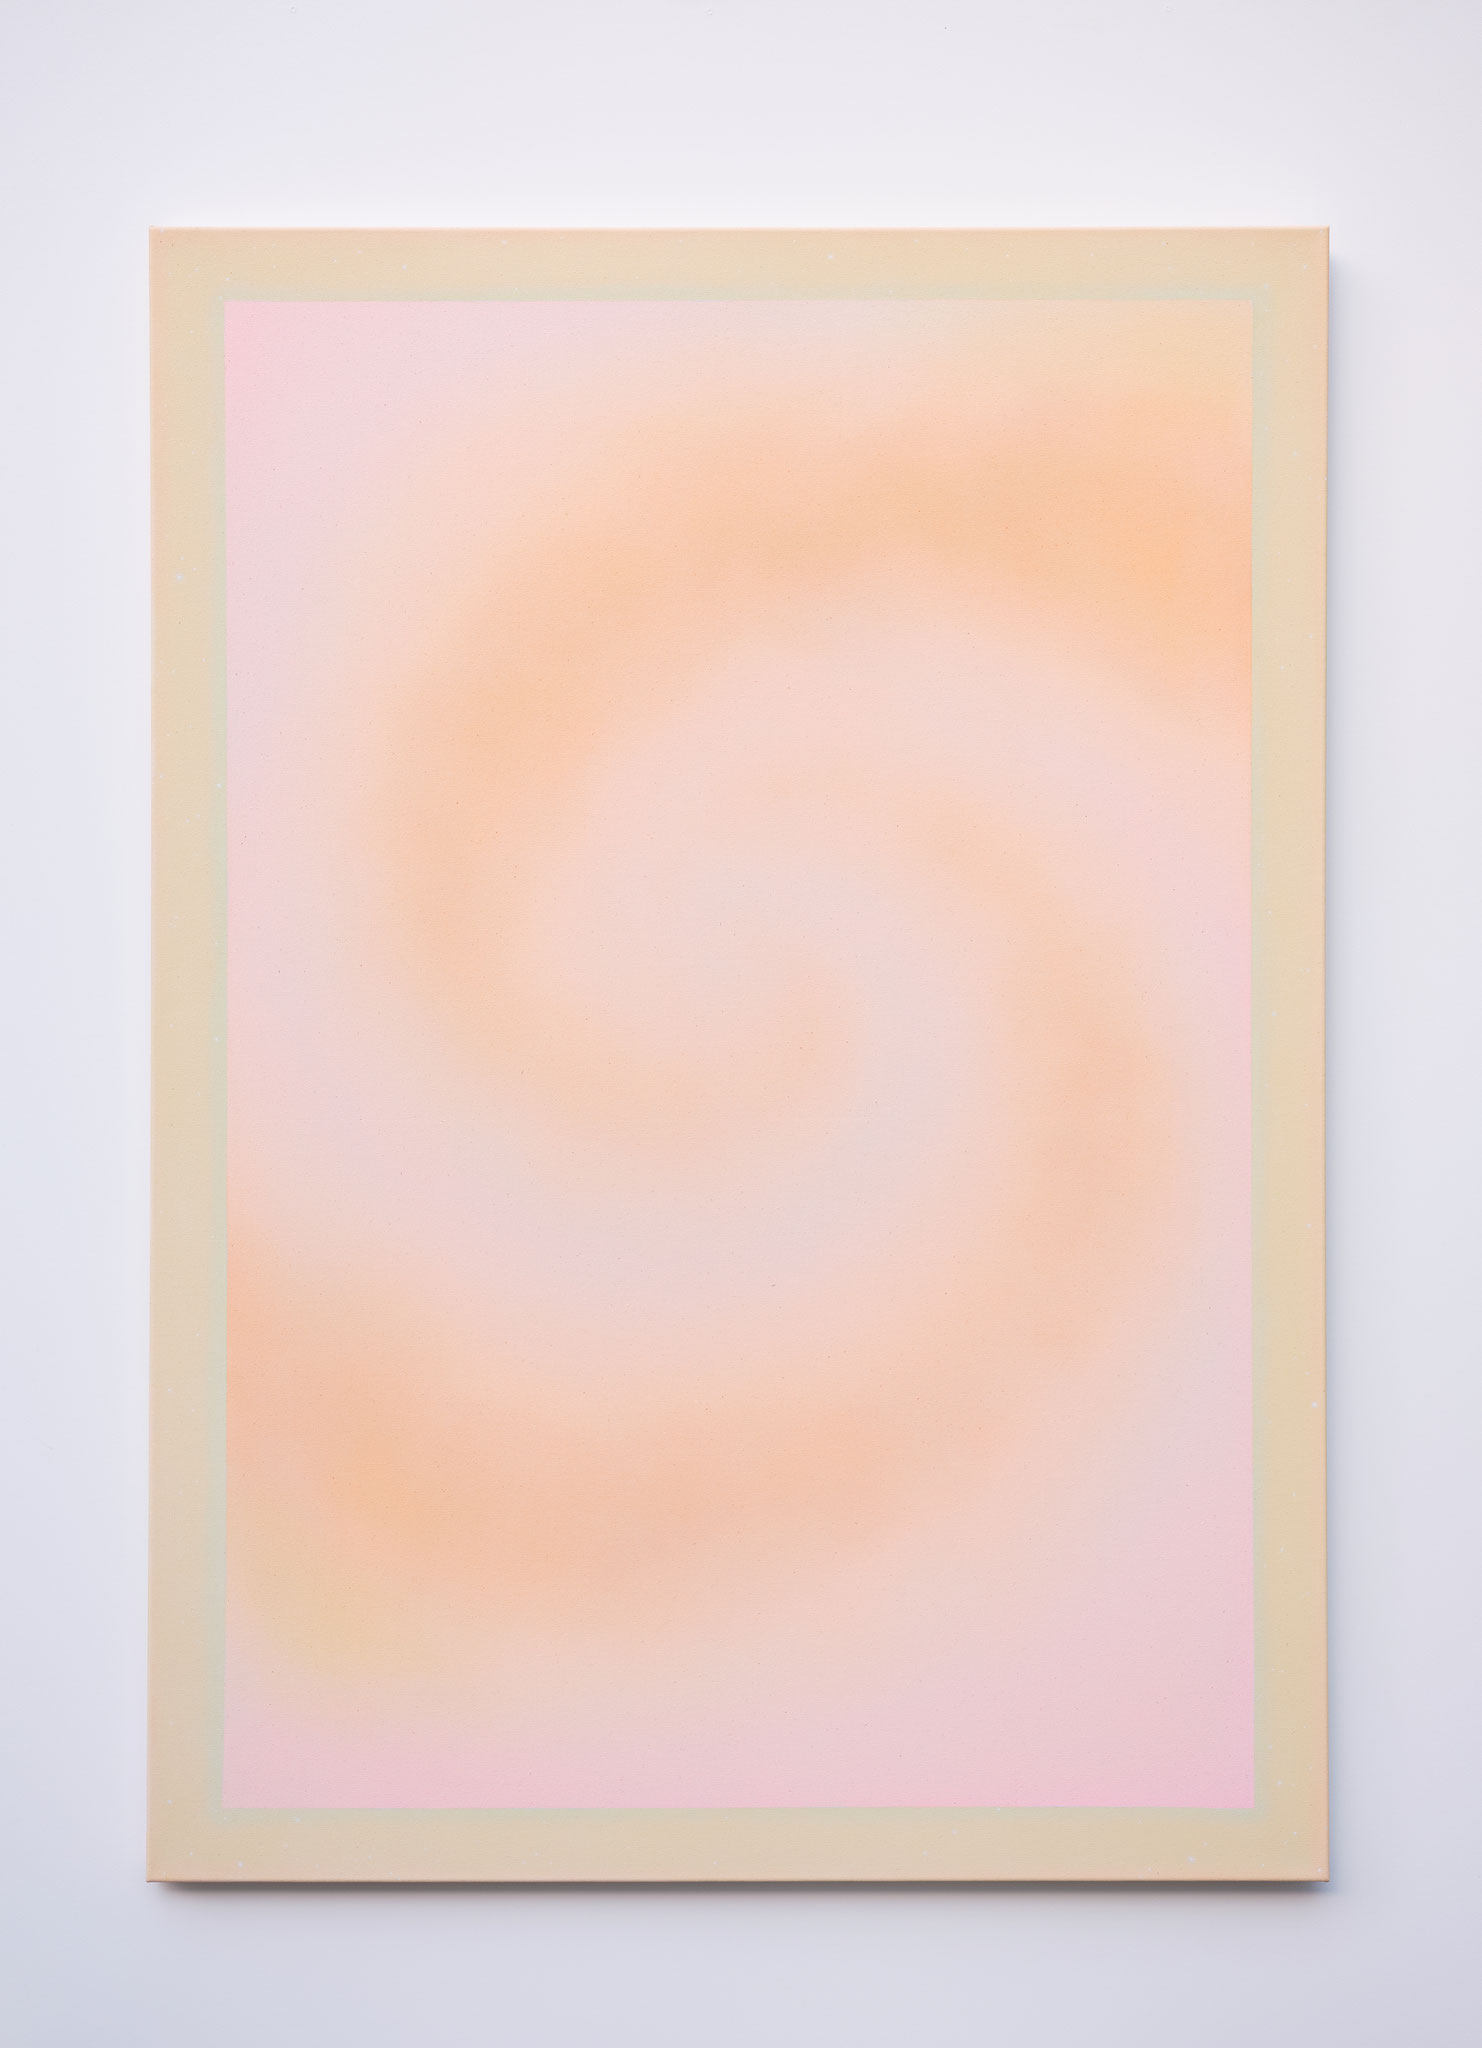 Alina Birkner "Untitled (Soft Creation)" 2018, 170x120 cm, Acrylic on Canvas